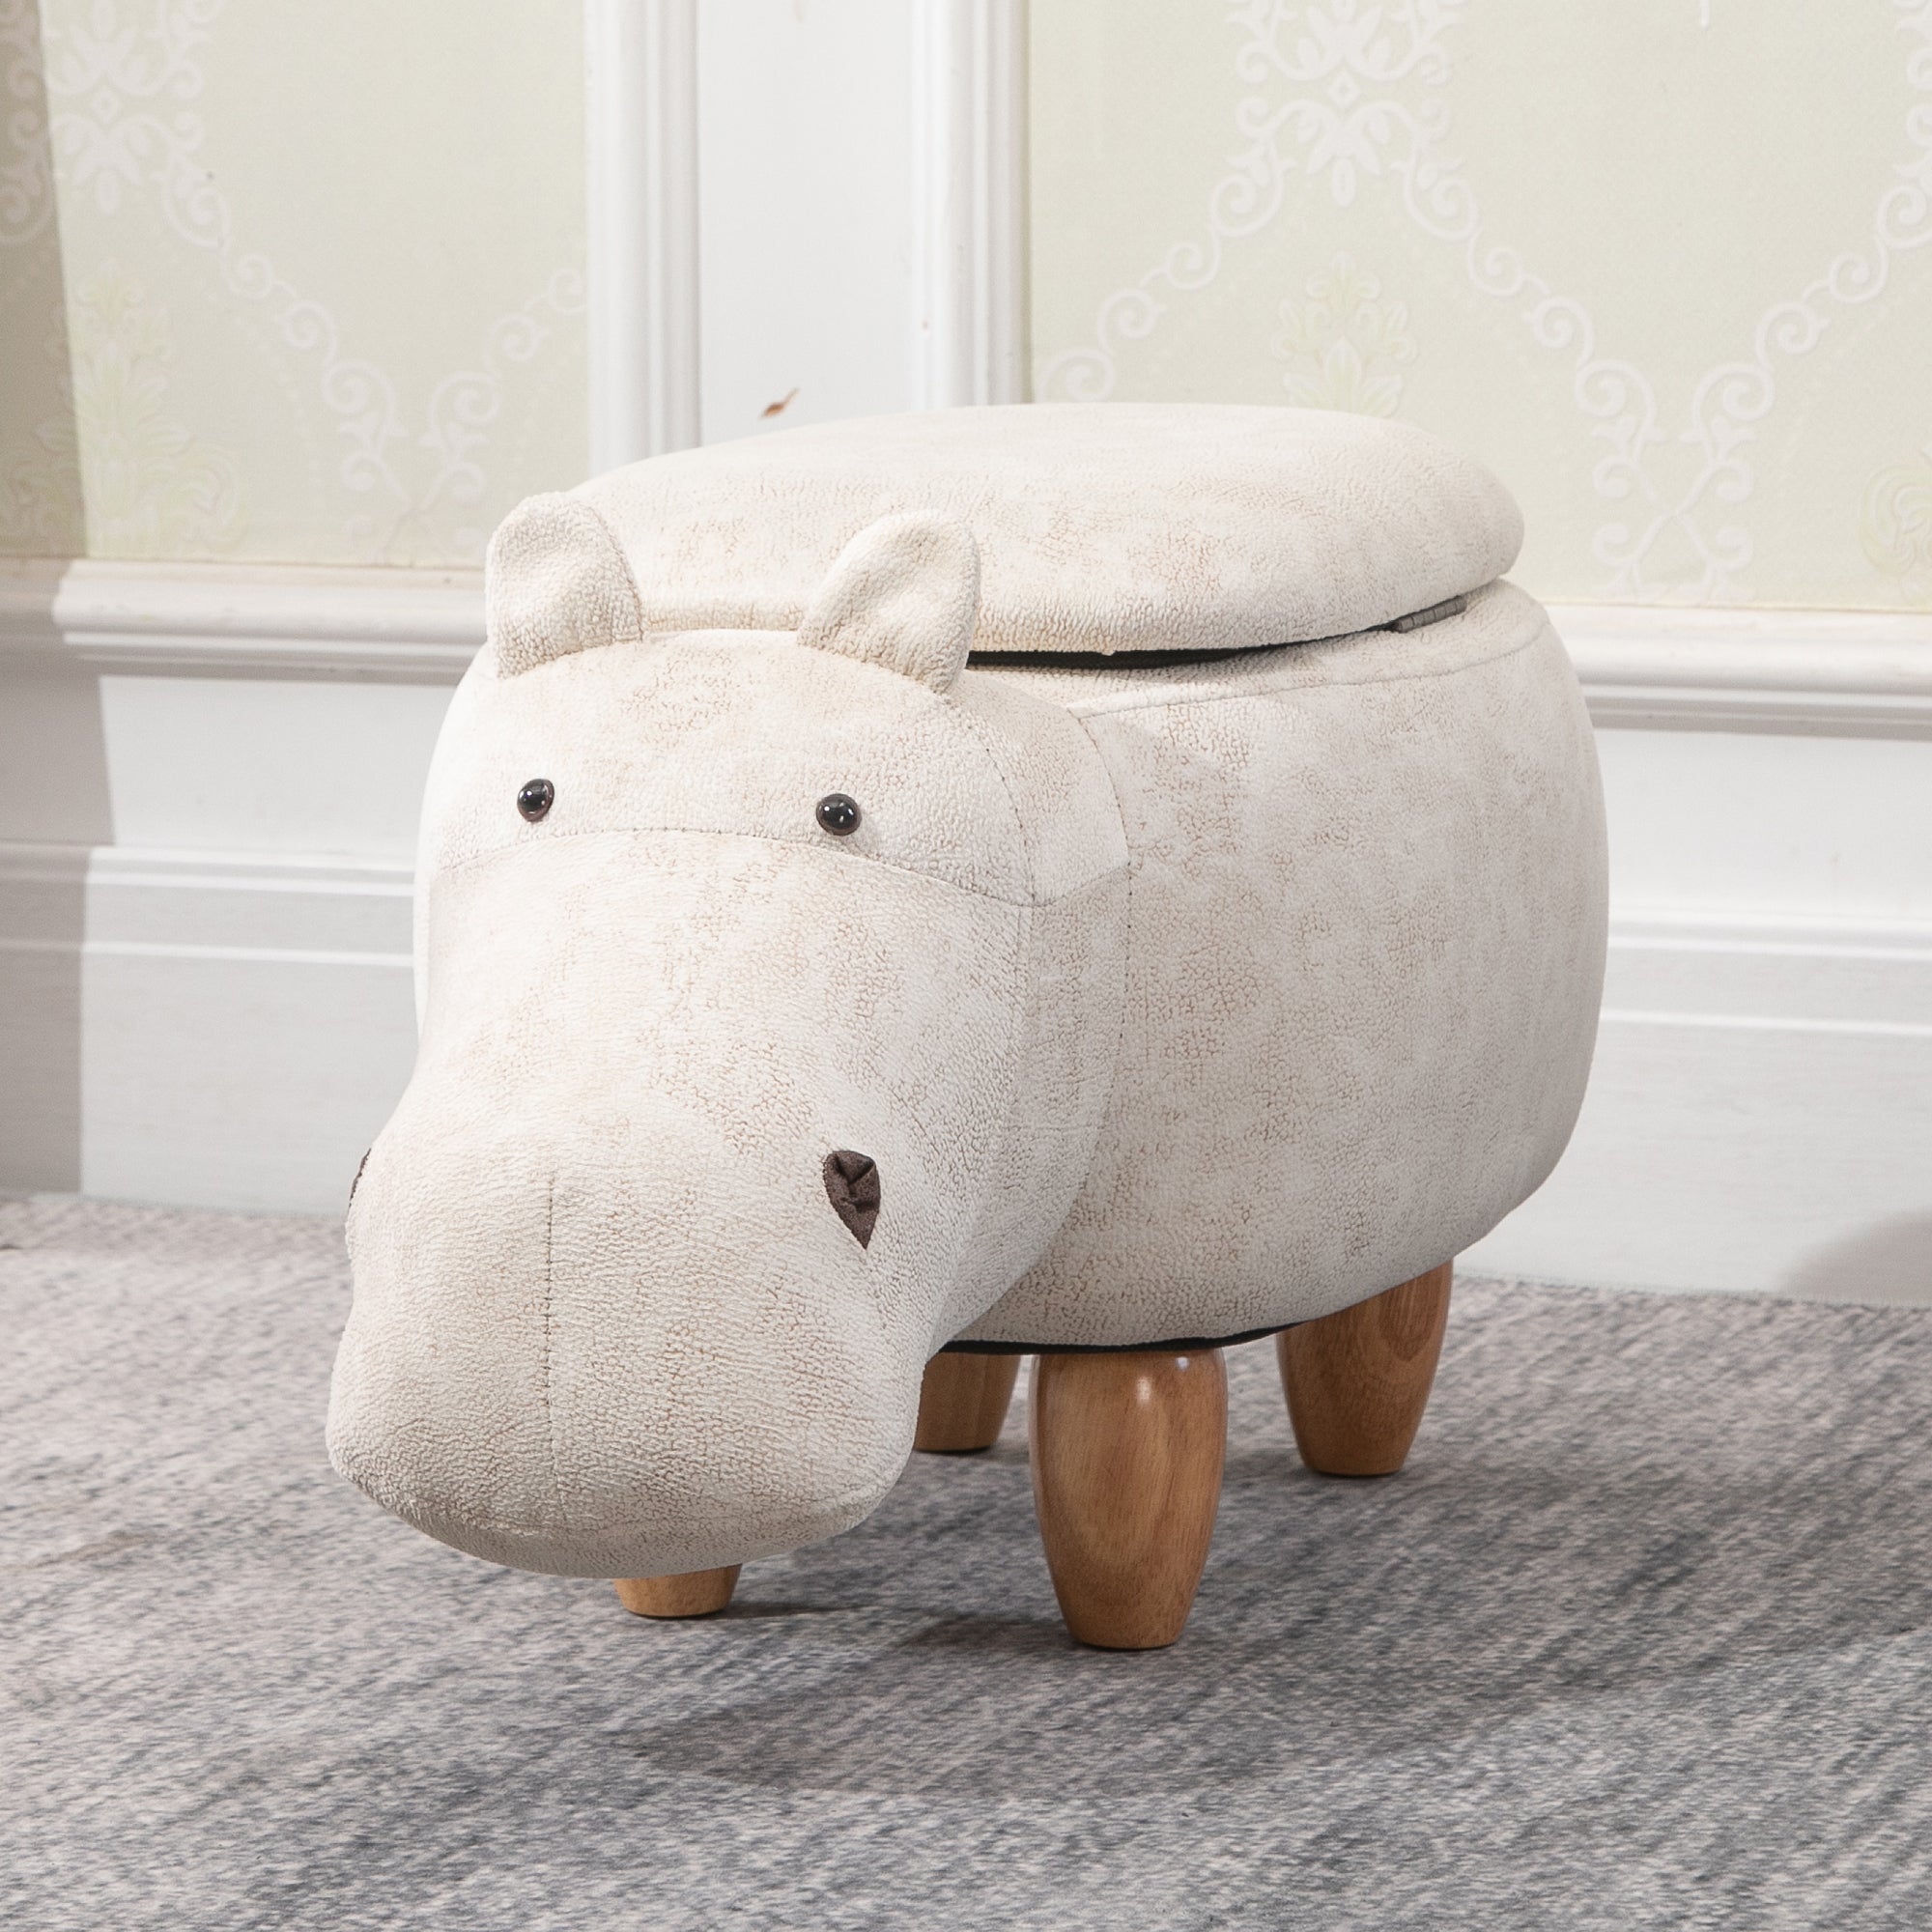 Hippo Storage Stool Cute Decoration Footrest Wood Frame Legs with Padding Lid Ottoman Animal Furniture Cream 36 x 65cm-1